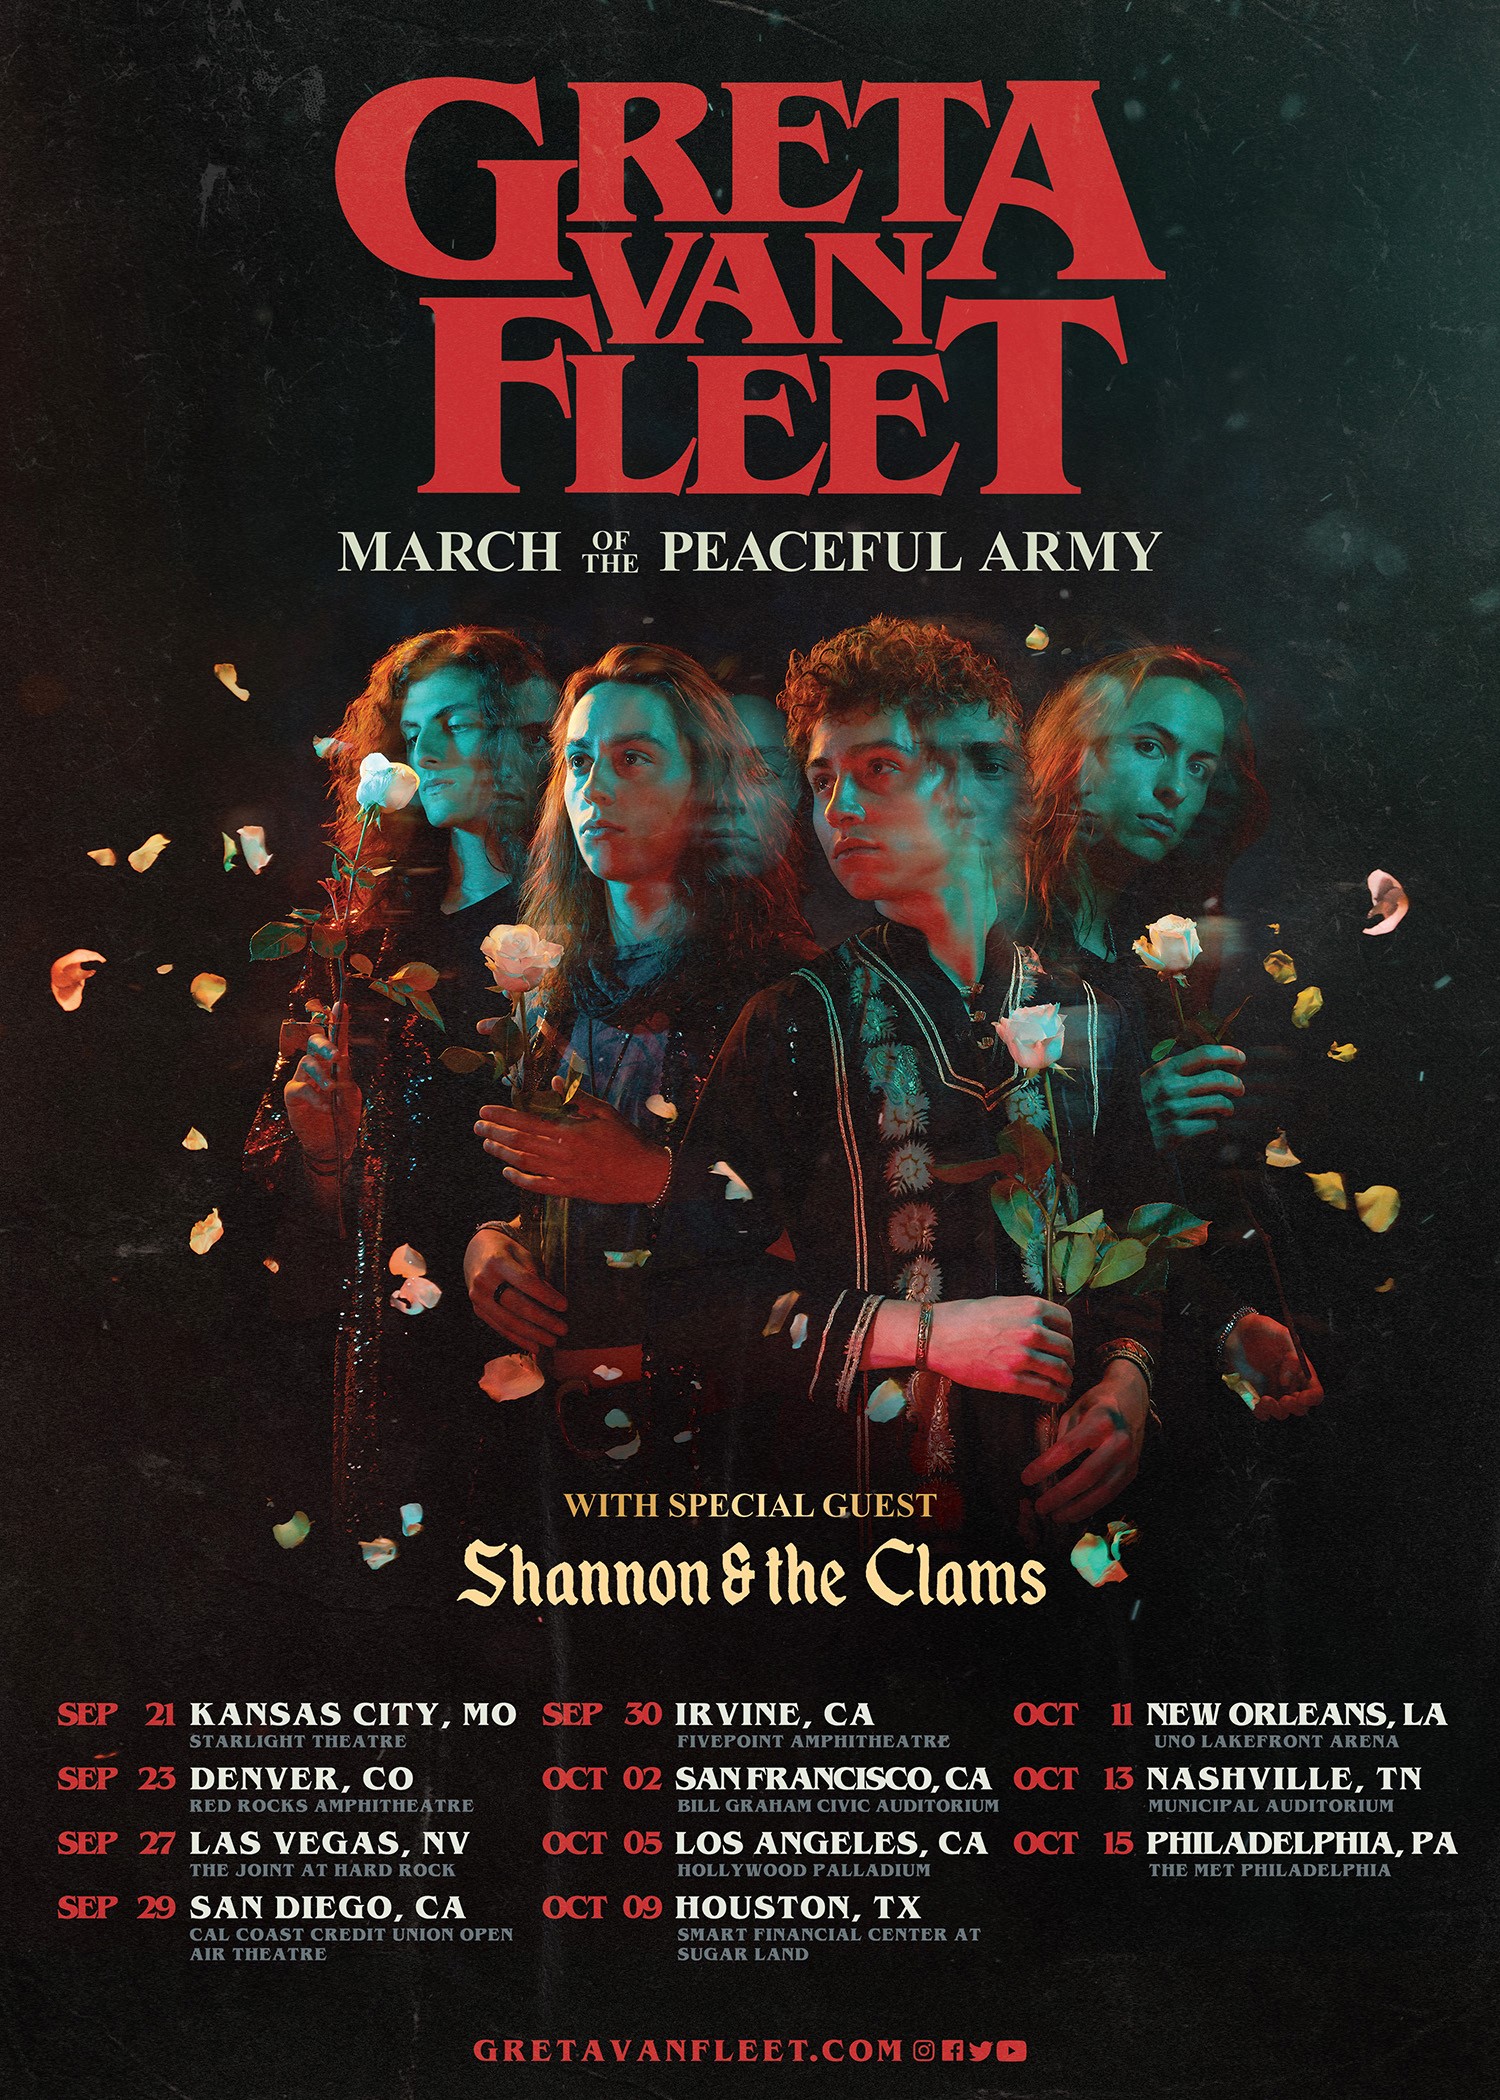 GRETA VAN FLEET ANNOUNCES FALL LEG OF ITS 2019 MARCH OF THE PEACEFUL ARMY TOUR